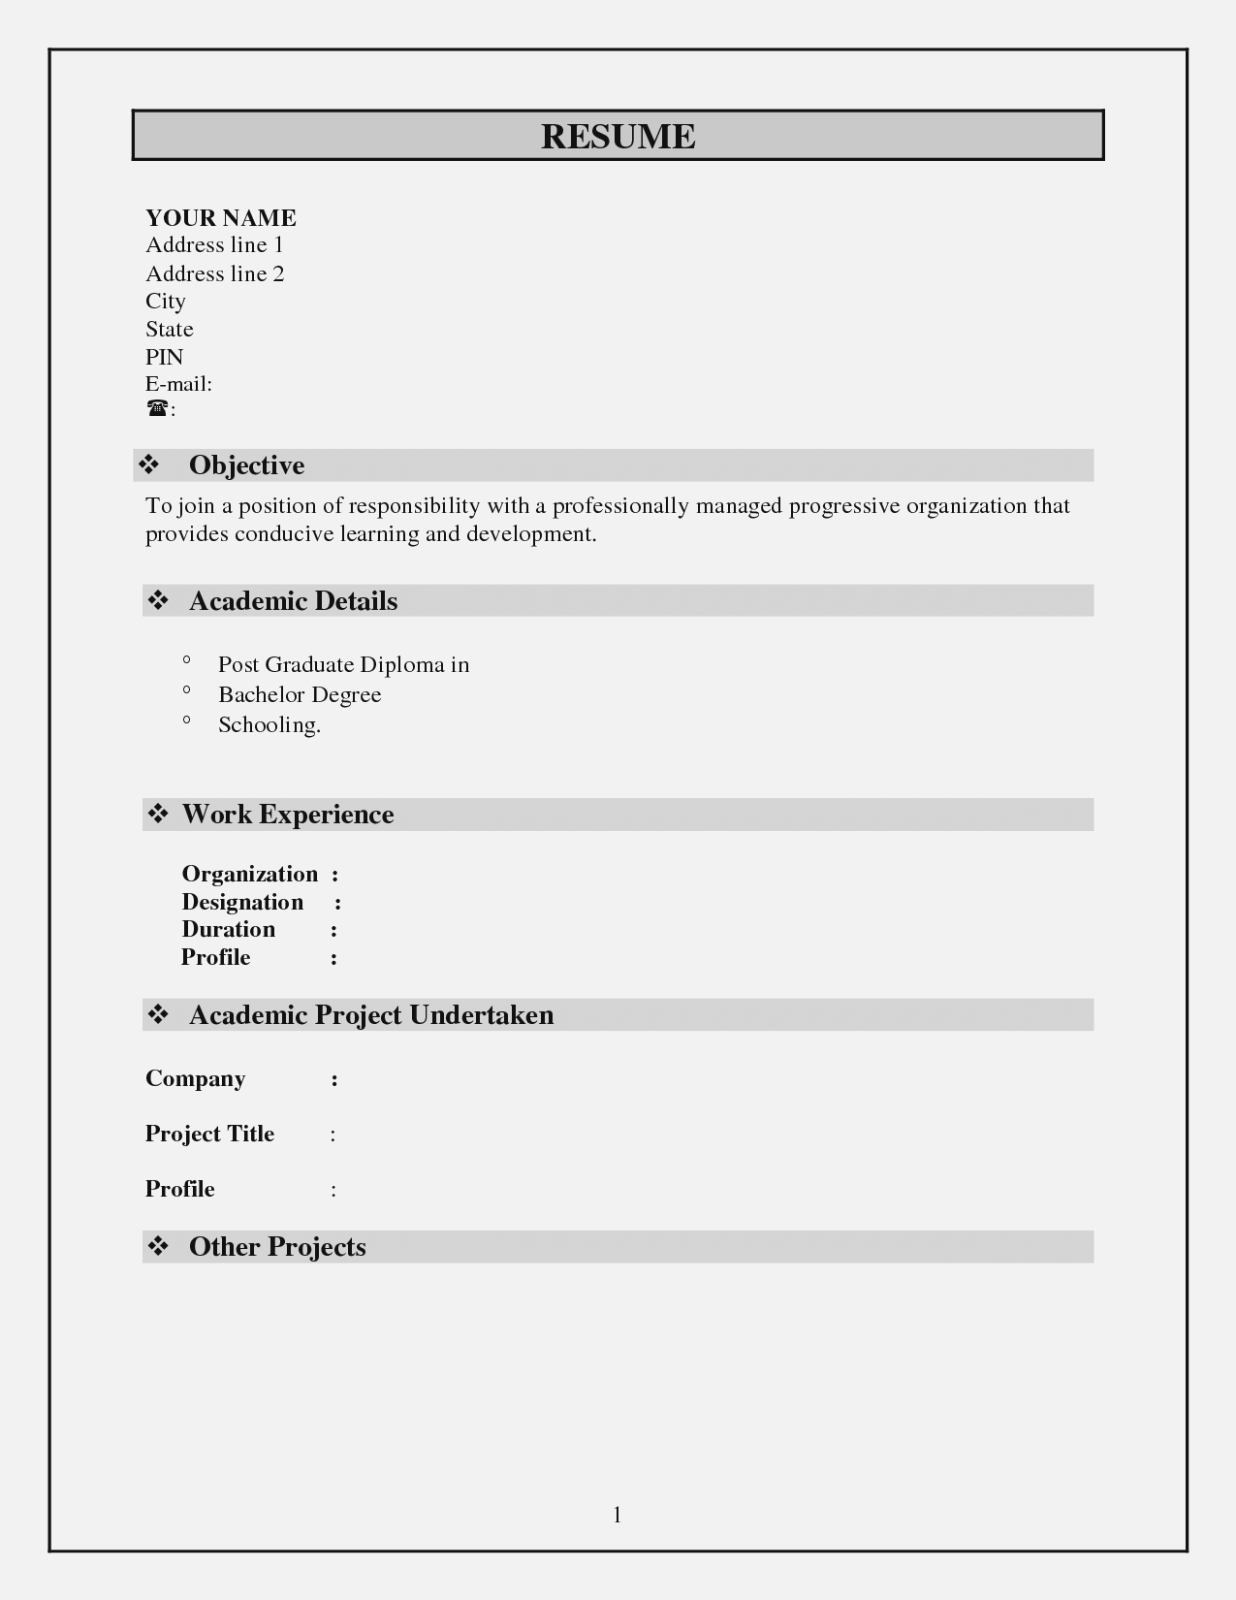 Basic Resume Format 2019 Basic Resume Format Examples 2020 basic resume format basic resume format download basic resume format word basic resume format pdf basic resume format for fresher basic resume format for job basic resume format doc basic resume format examples